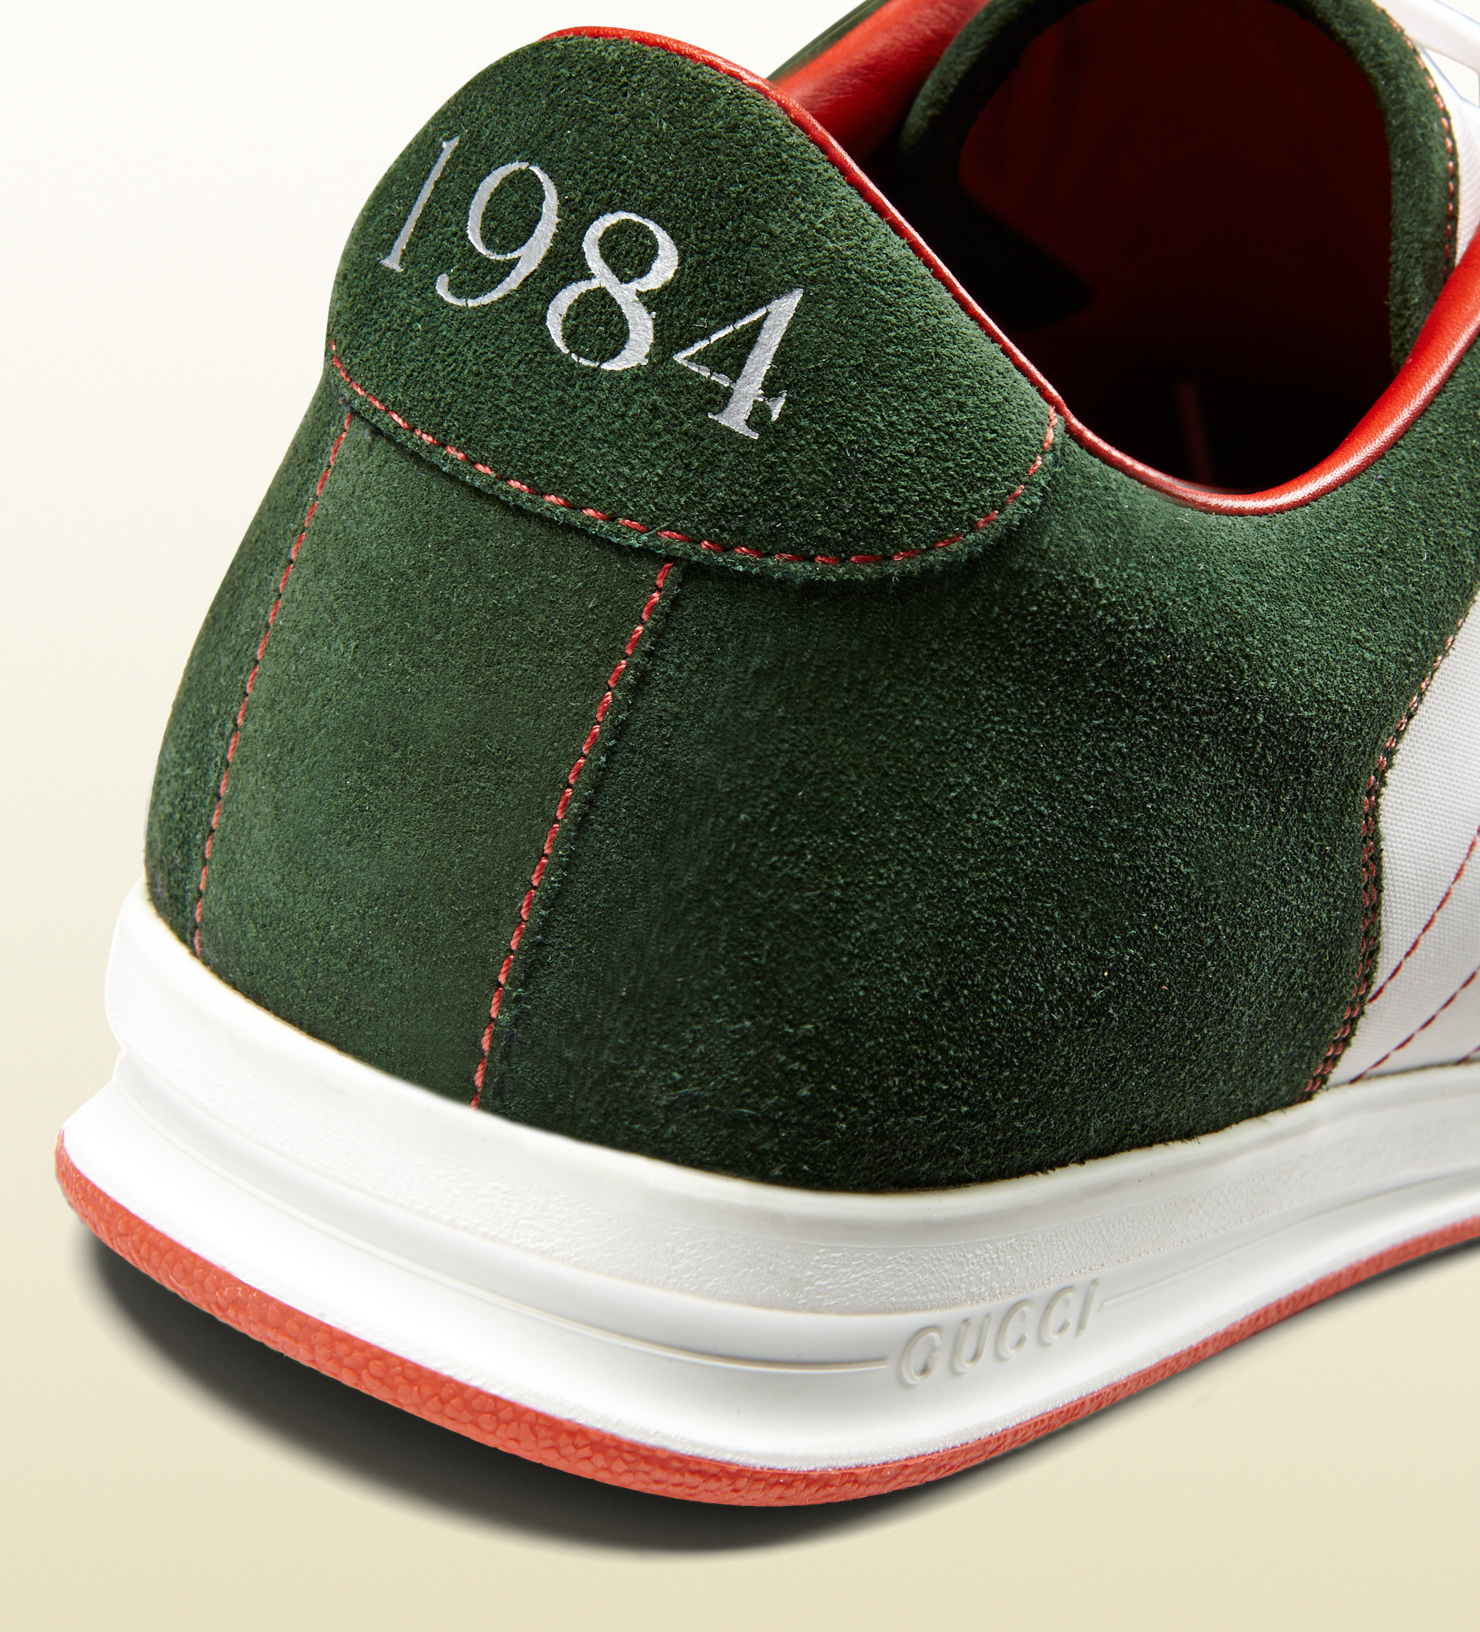 gucci 1984 low top sneaker